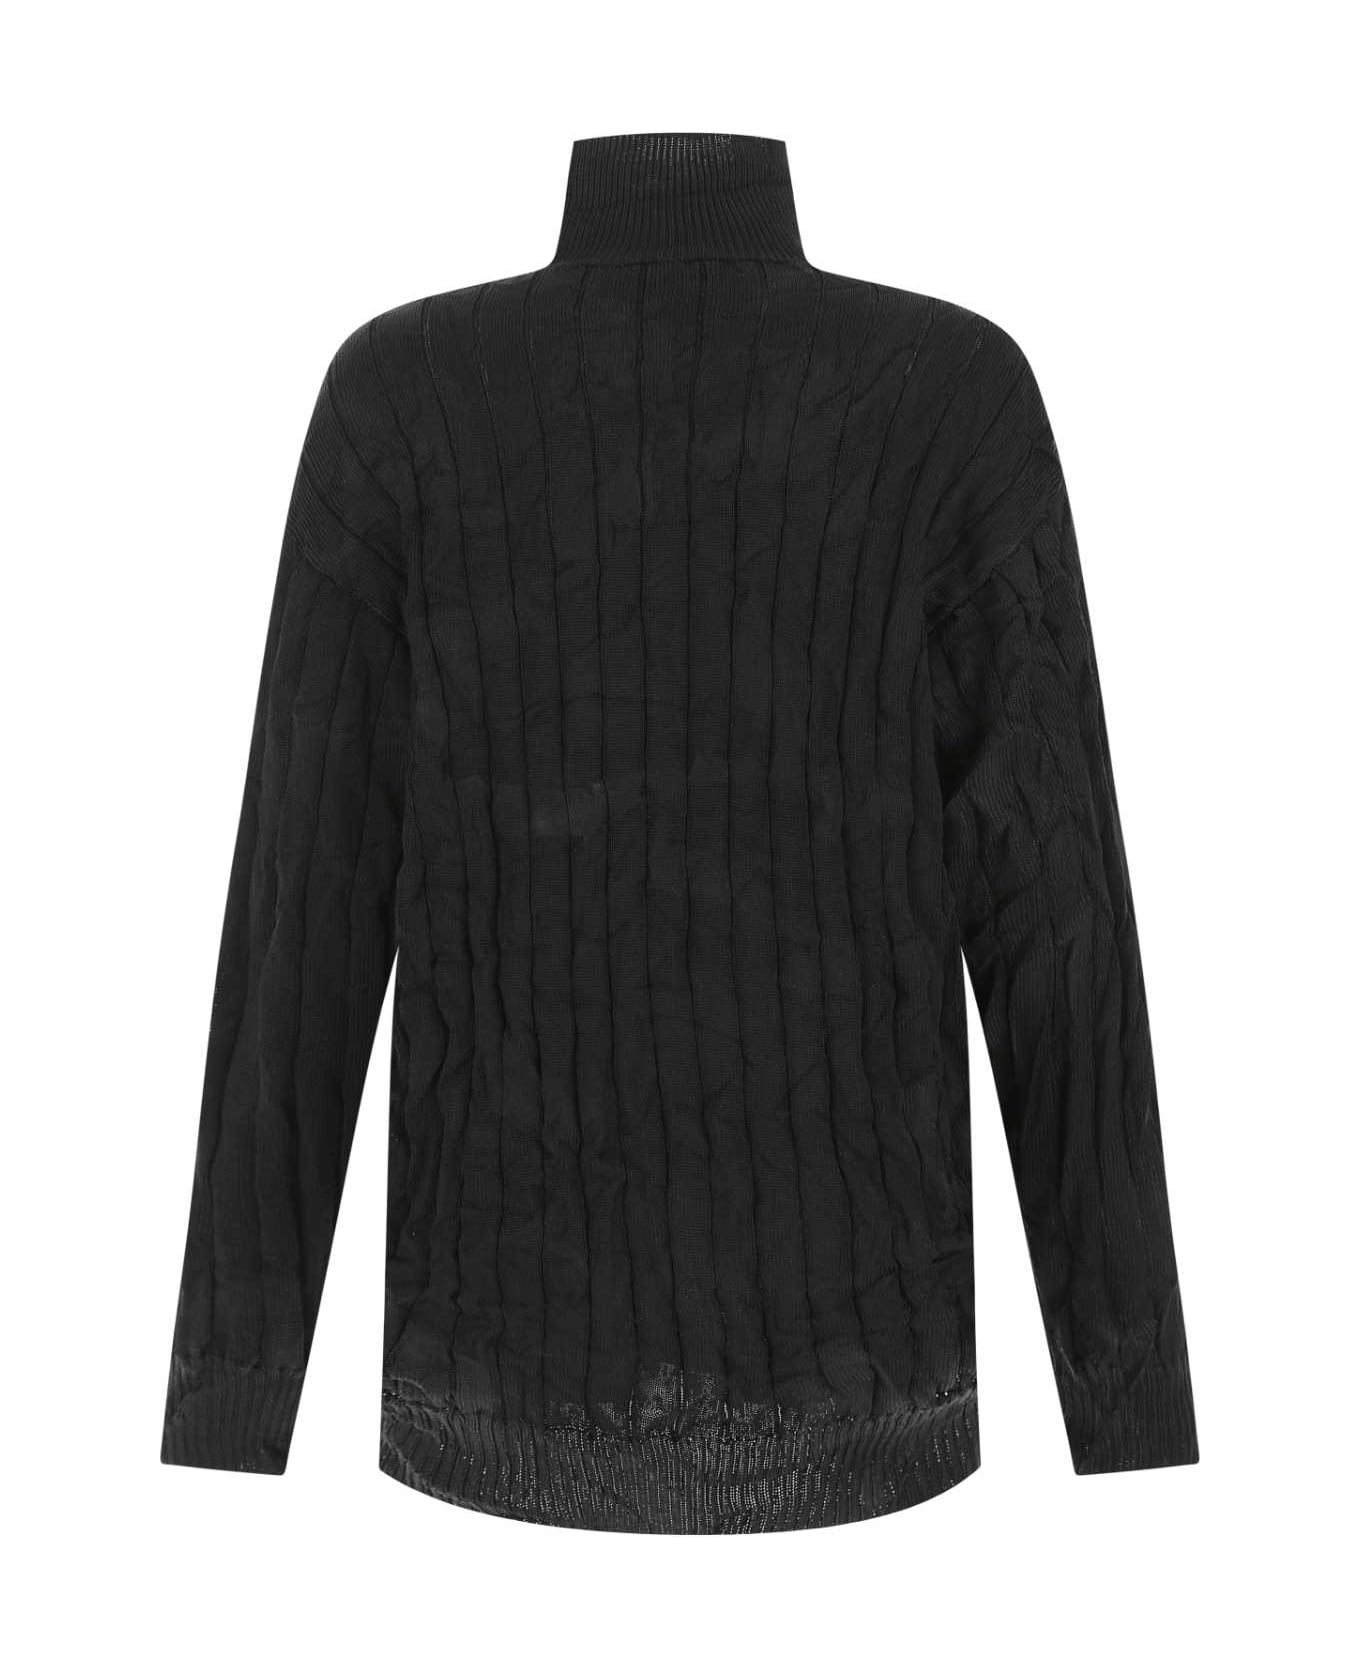 Balenciaga Black Silk Blend Oversize Sweater - 0100 ニットウェア